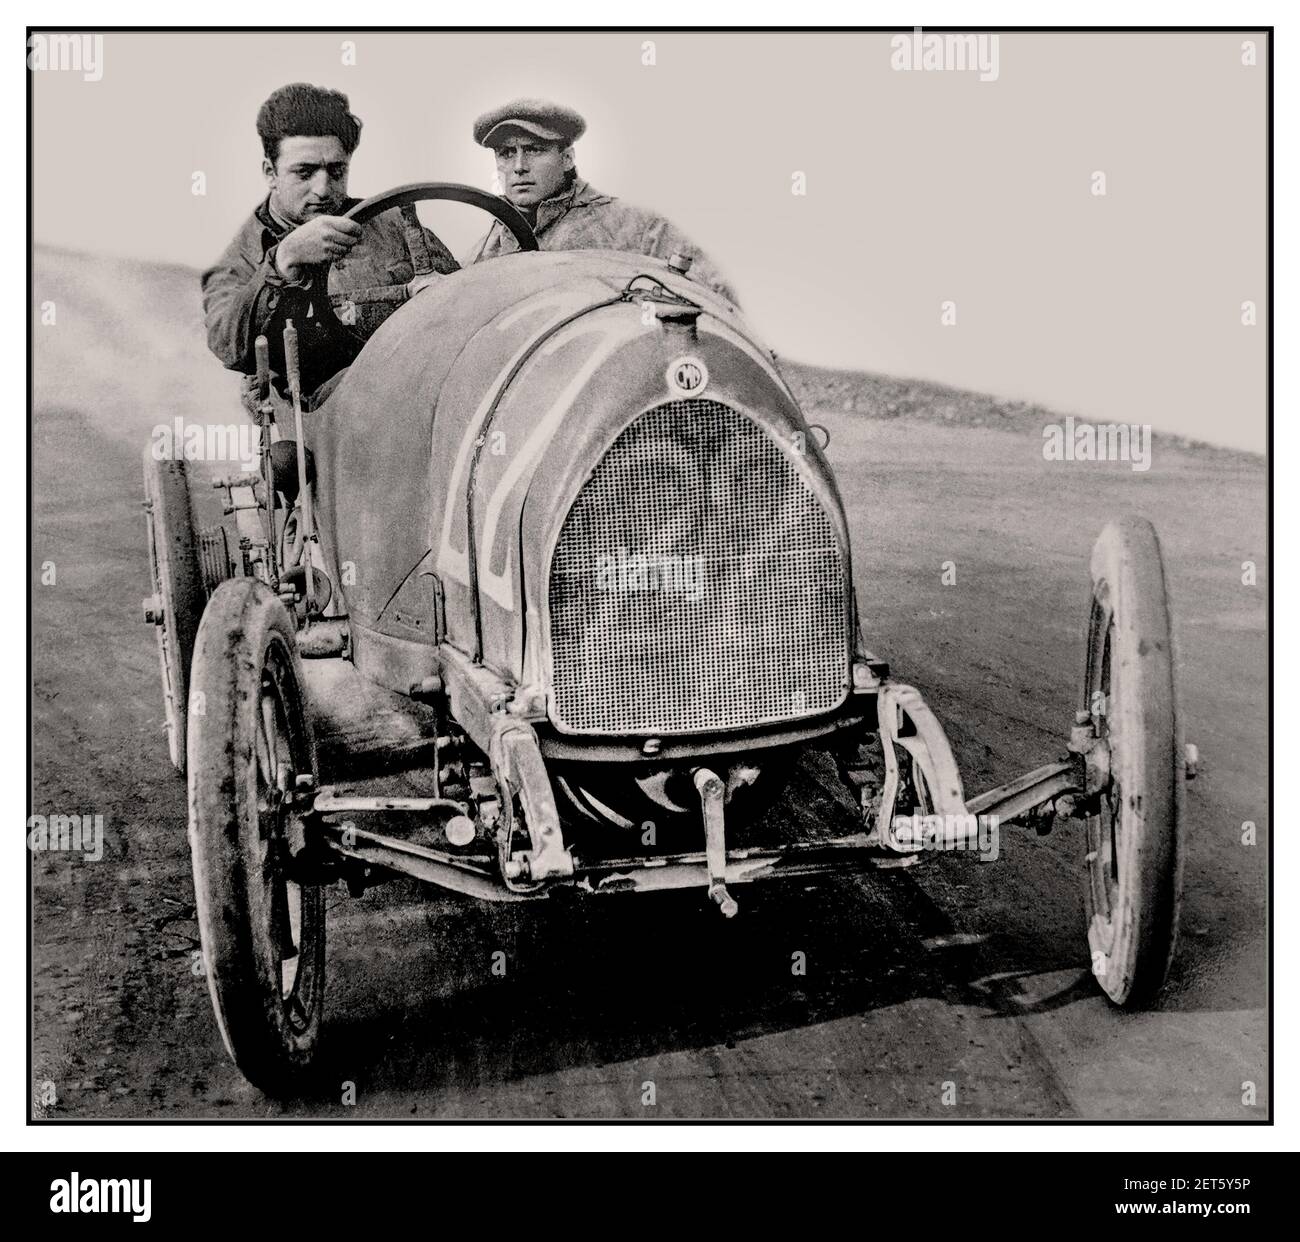 ENZO FERRARI Archiv Jahrgang 1919 Bild eines jungen Enzo Ferrari in seinem ersten Rennen überhaupt als Profi-Fahrer im Jahr No,22 C.M.N. (Costruzioni Meccaniche Nazionali) Parma-Poggio di Berceto Bergrennen 1919 Stockfoto